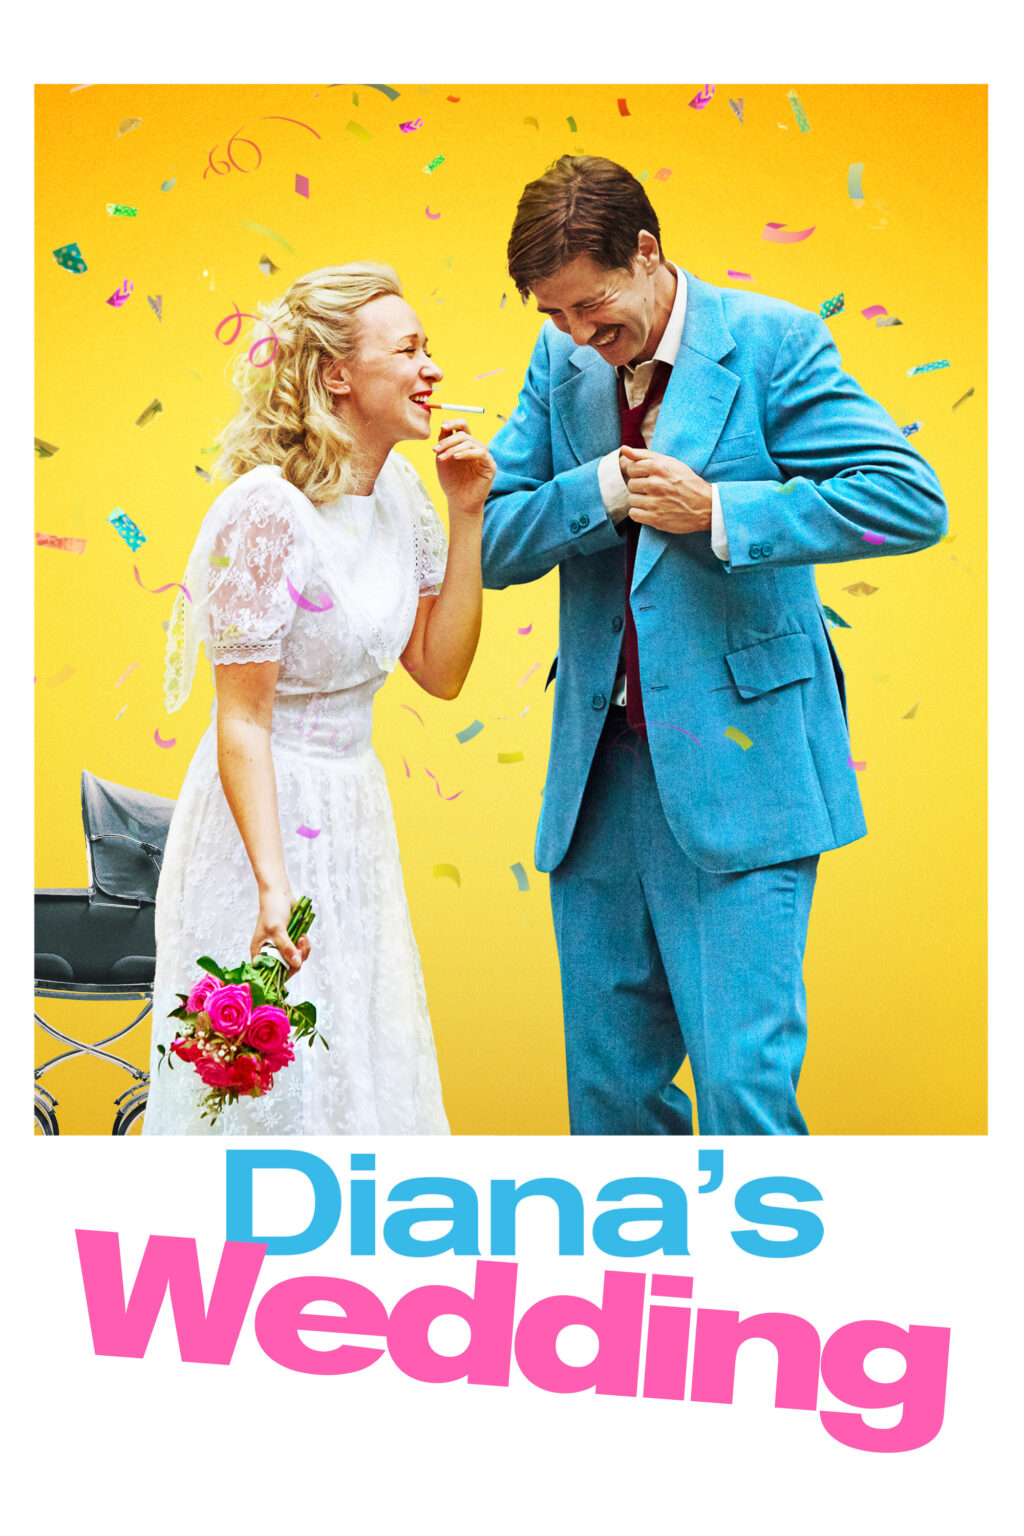 diana's wedding movie review